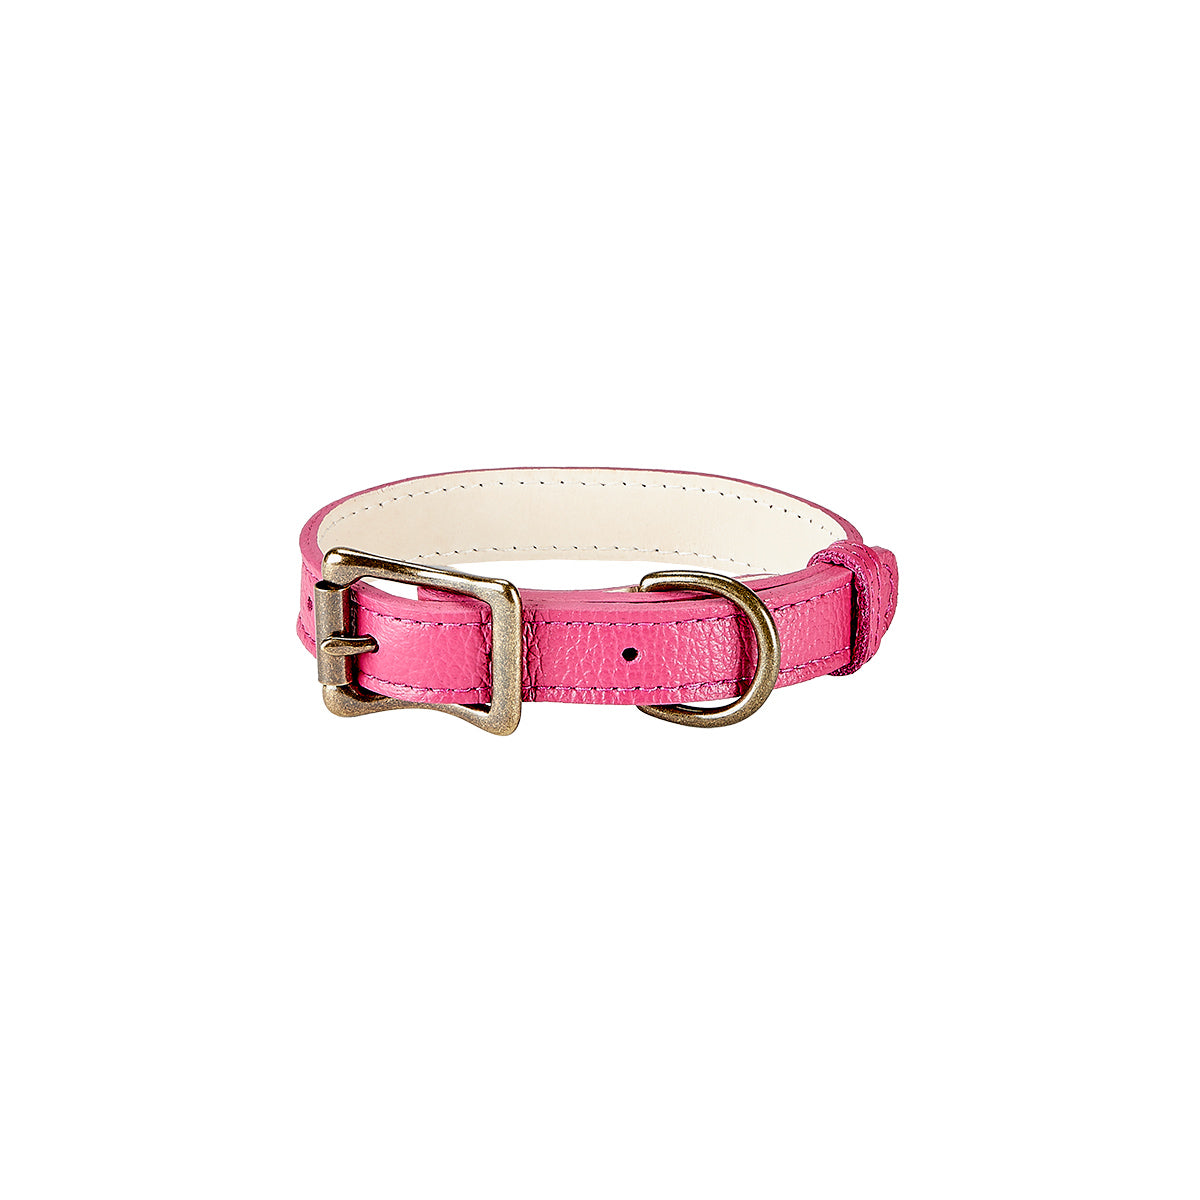 Graphic Image Small Dog Collar Pink Pebble Grain Leather